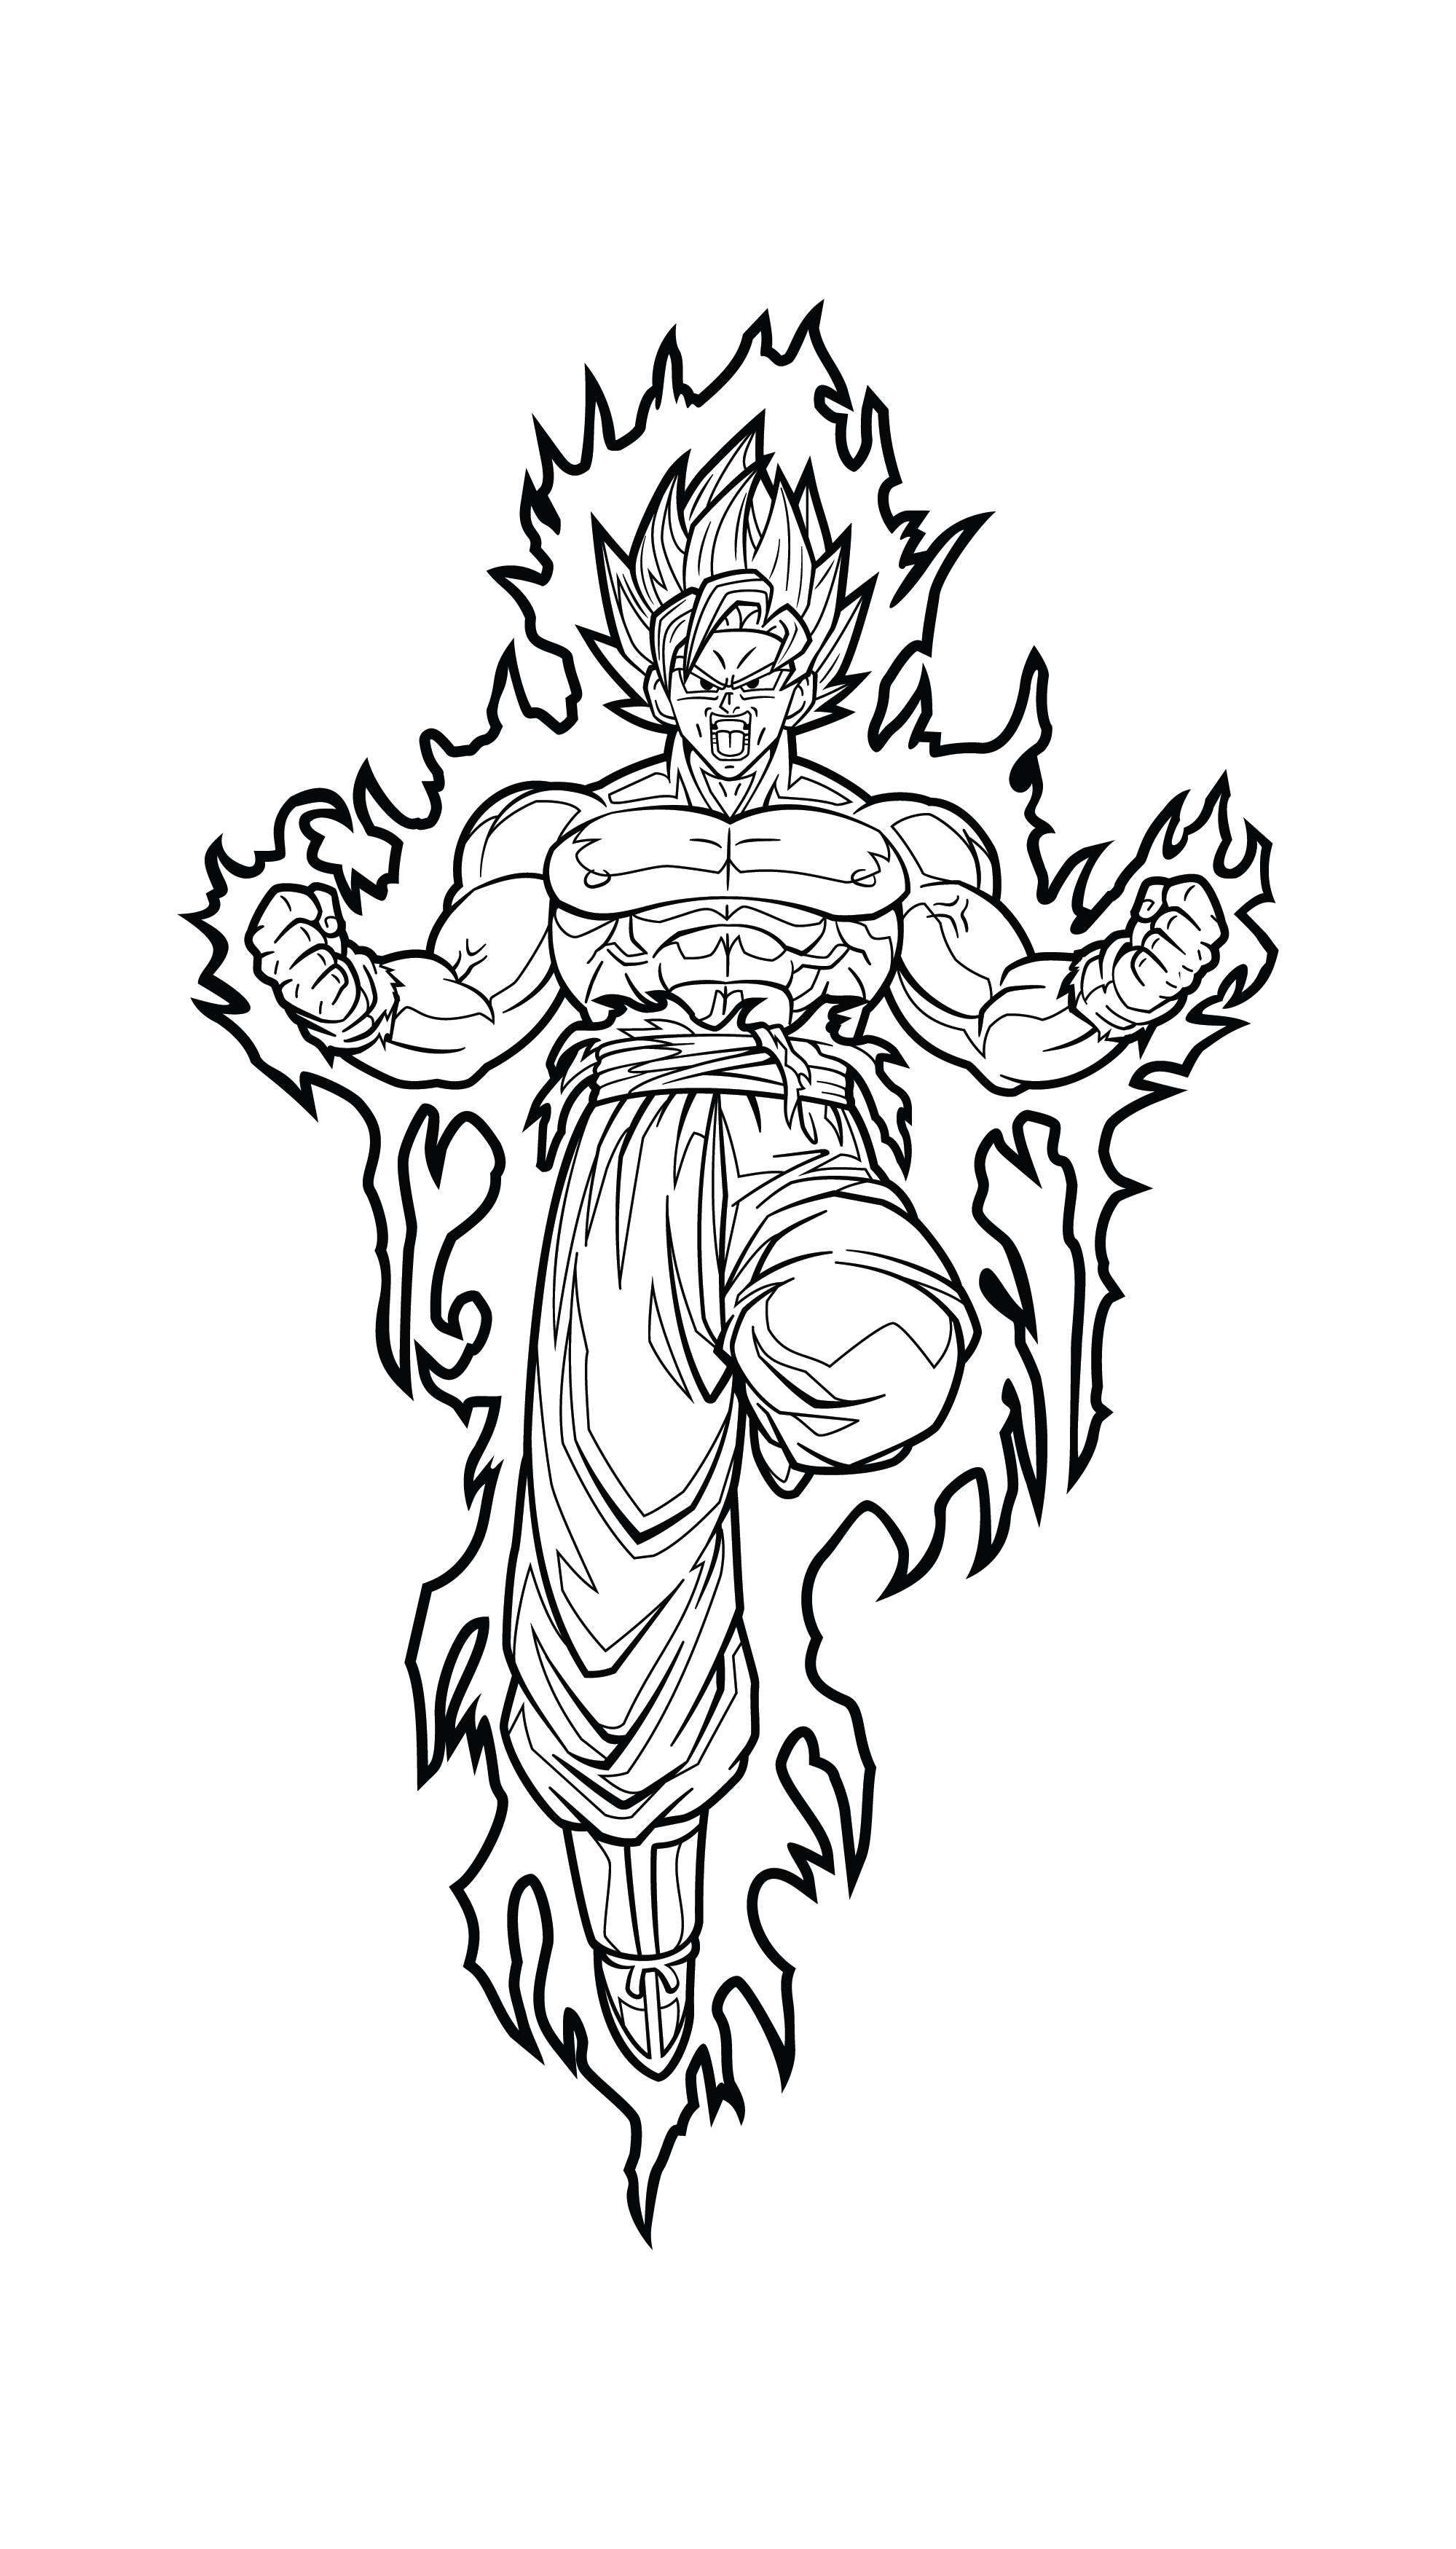 Super Saiyan Goku (1102)